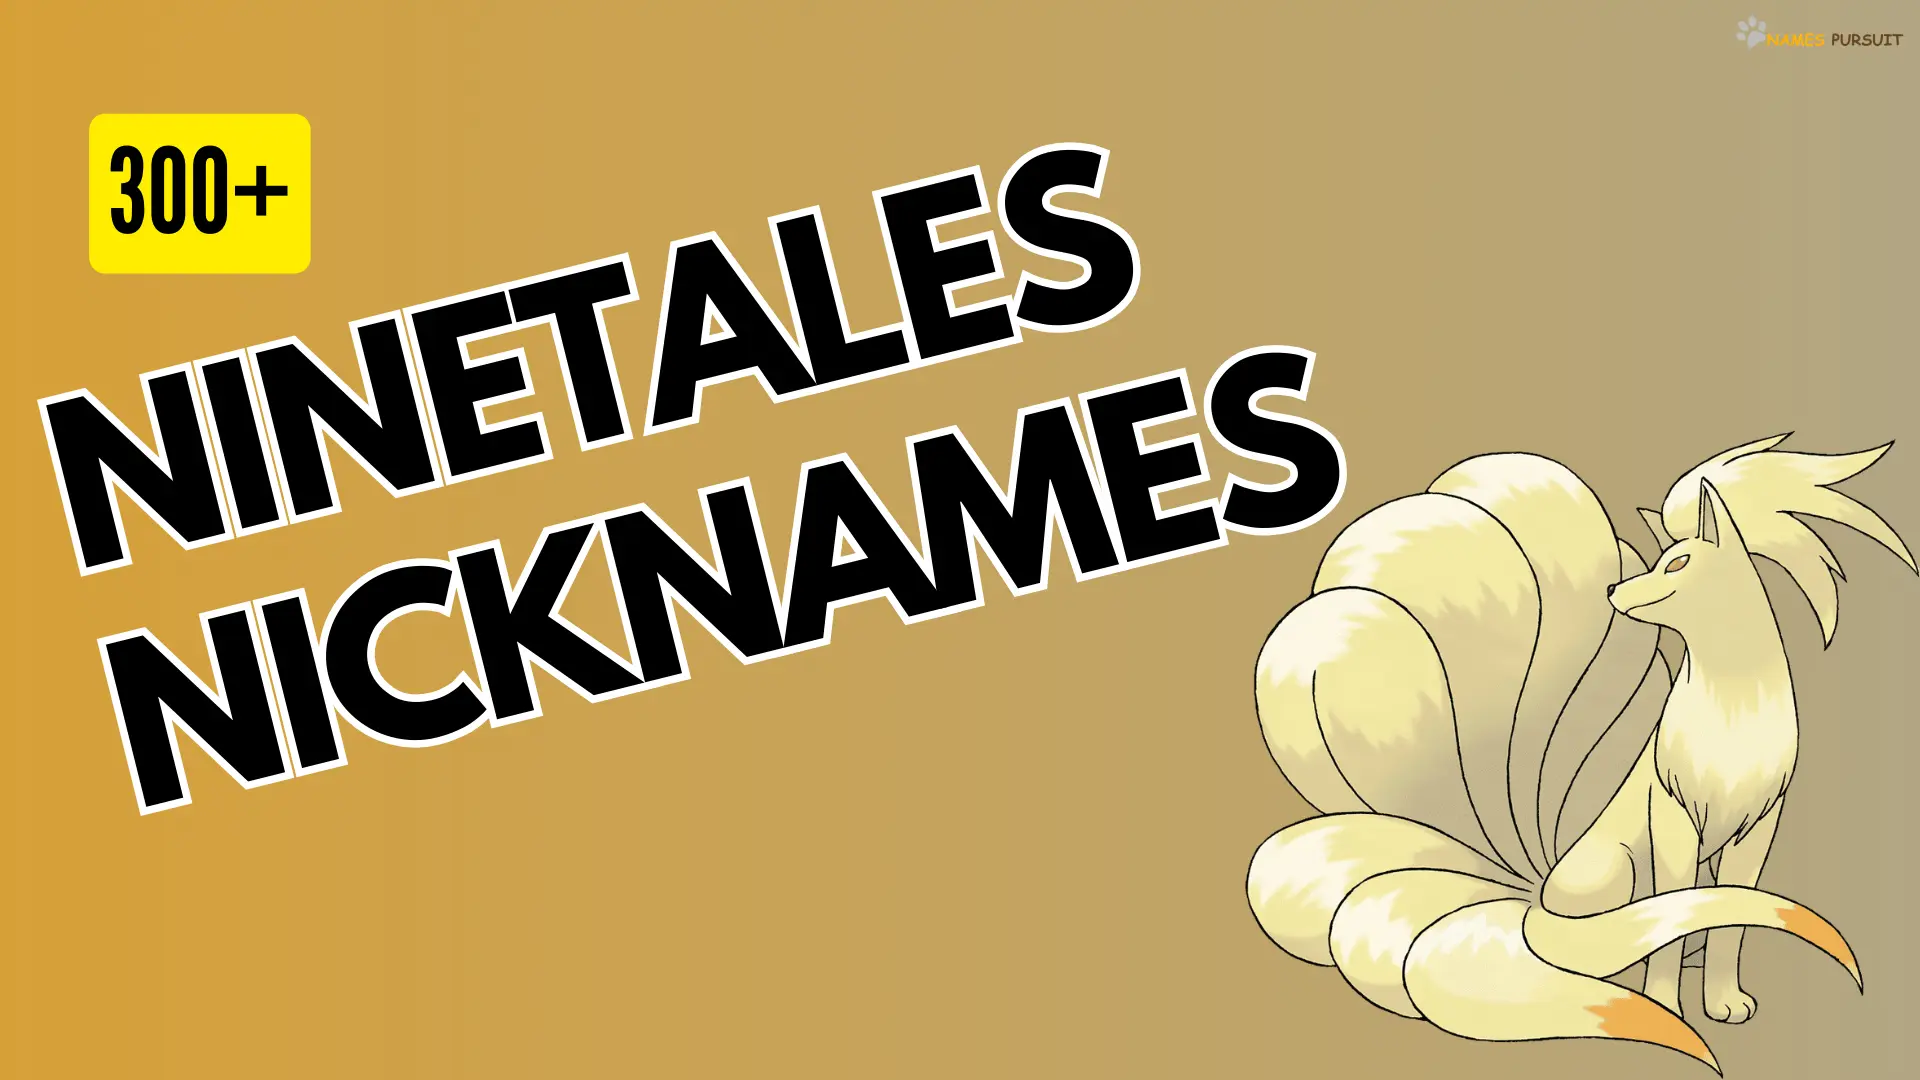 Ninetales Nicknames - names pursuit